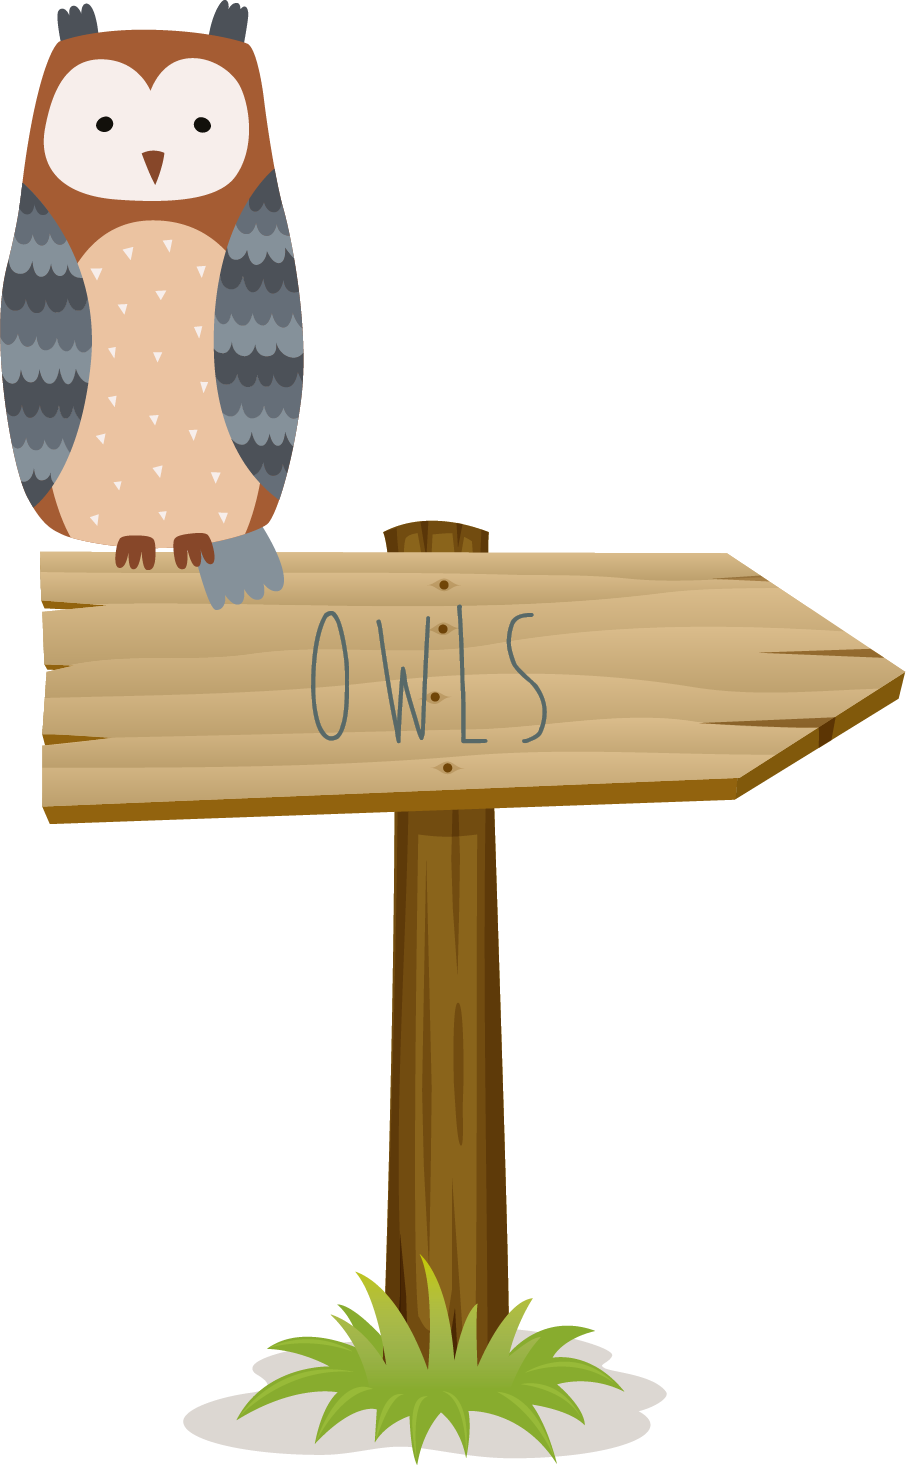 owls sign